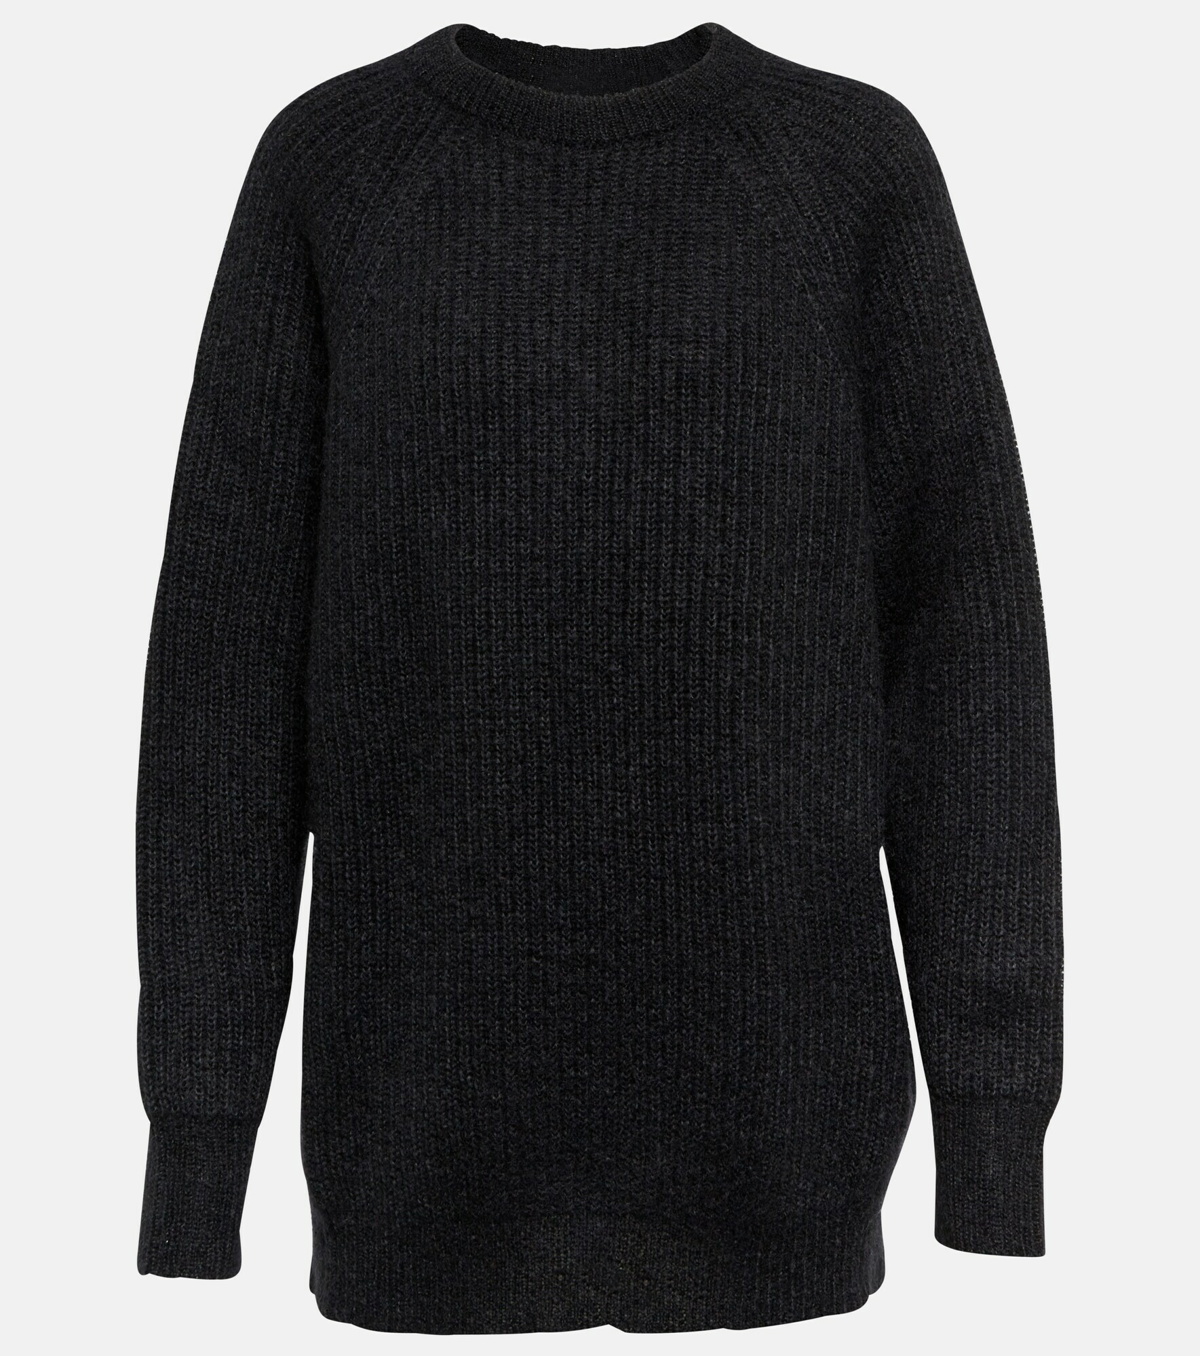 Black ribbed turtleneck sweater HELGA